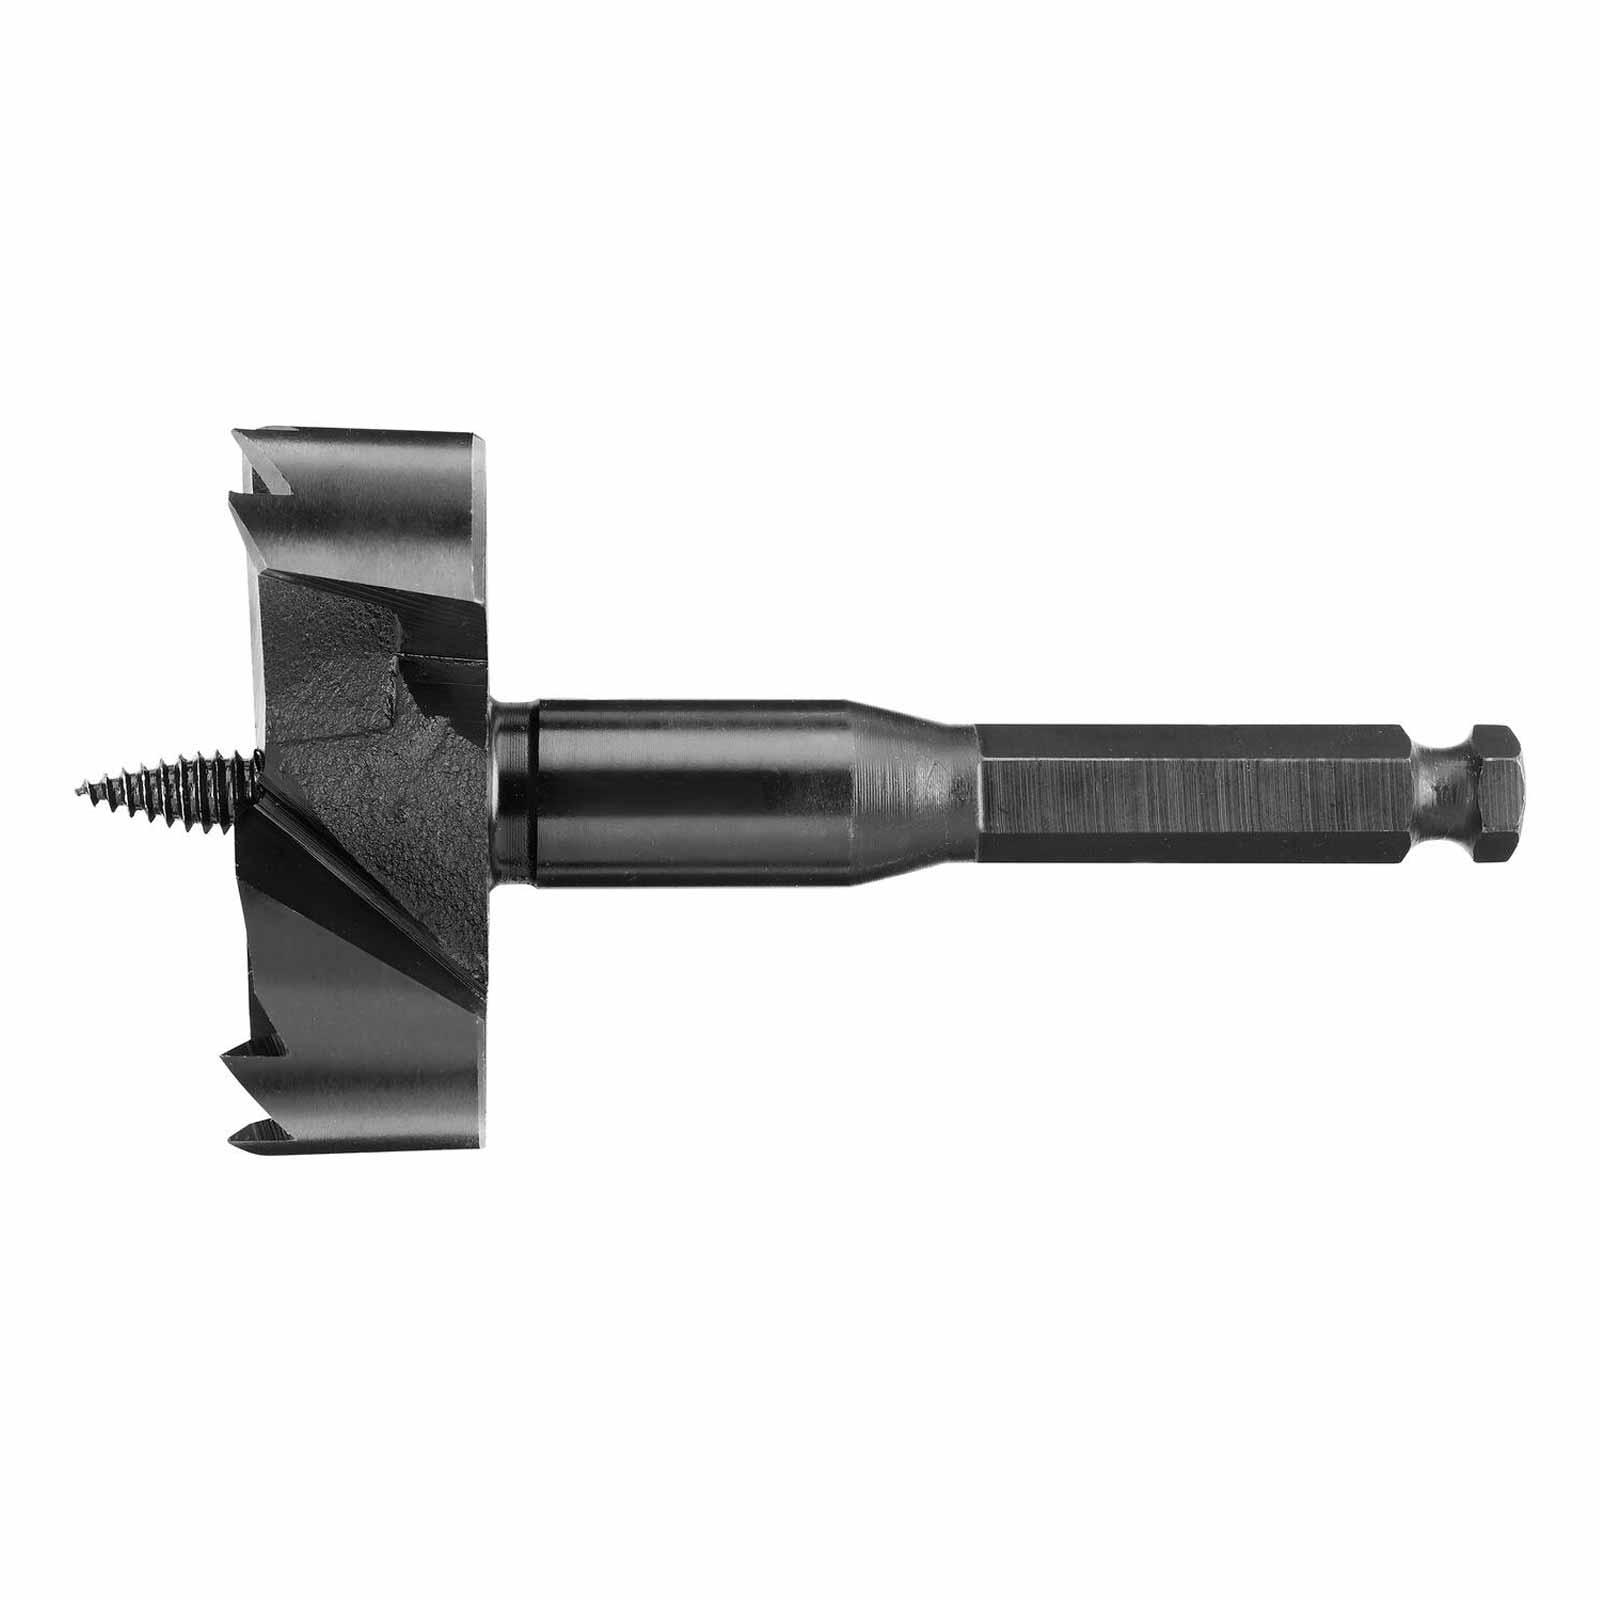 DeWALT Rapid-Holzbohrer, Forstnerbohrer, Hart- und Weichholzbohrer - Ø25 - 117mm Abmessungen:57 mm von Dewalt